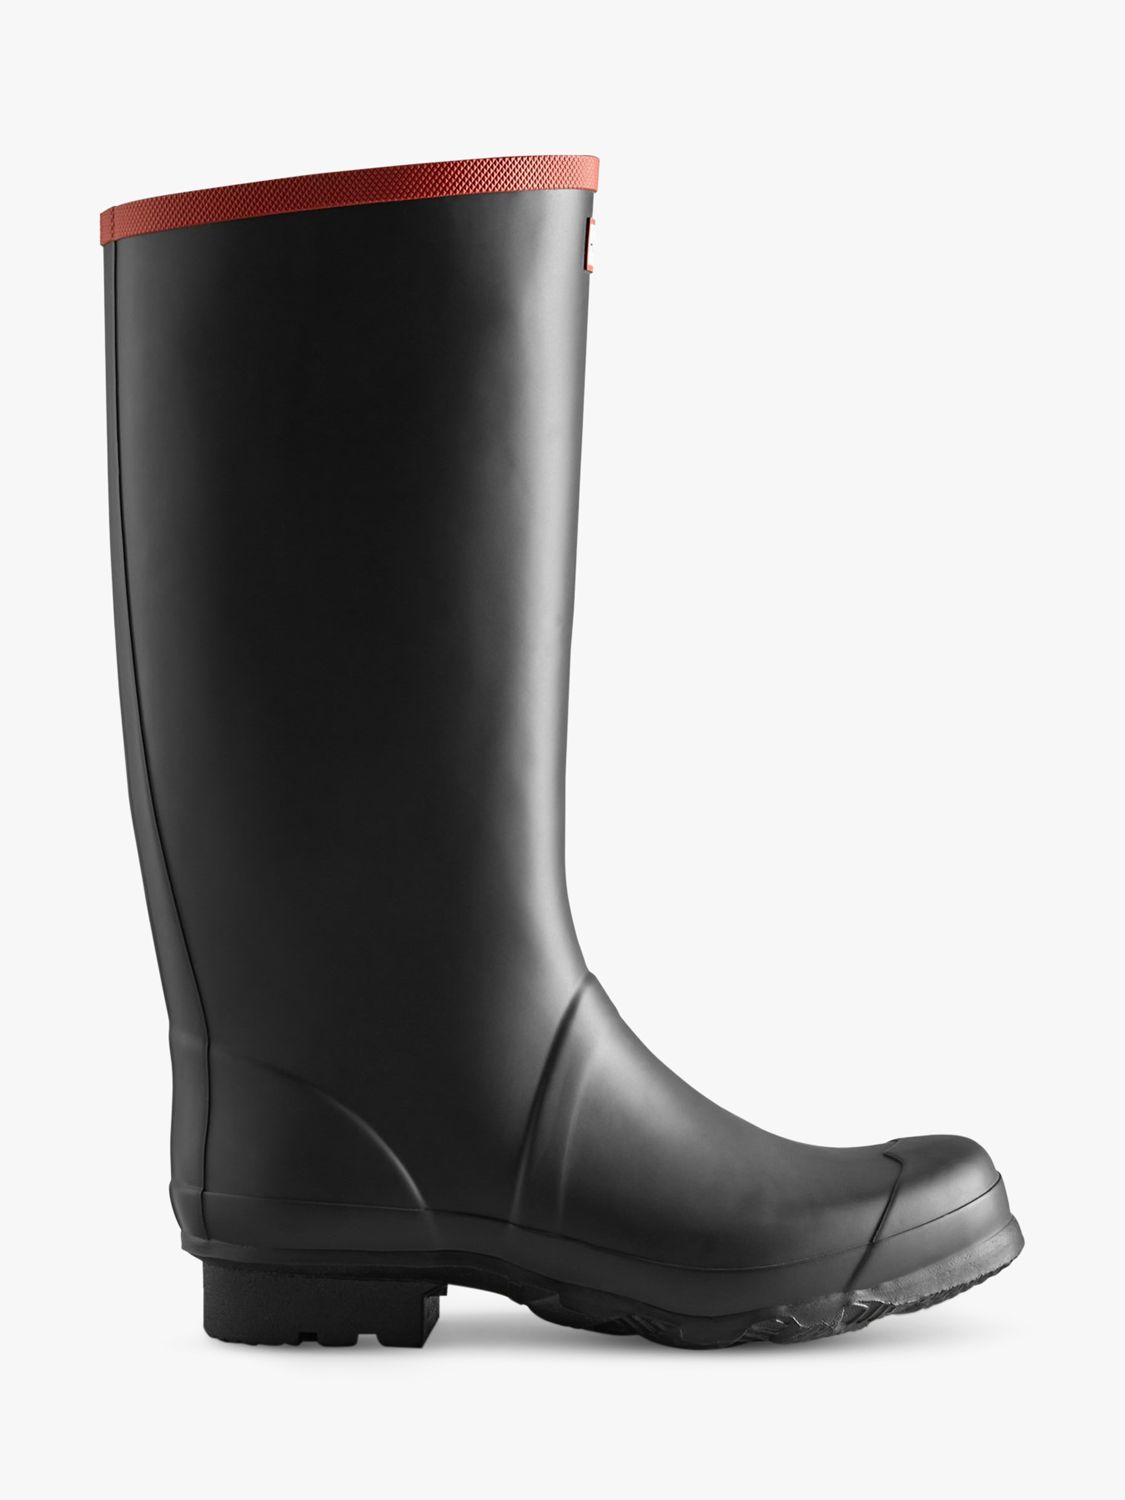 Hunter Argyll Full Knee Wellington Boots, Black, 5